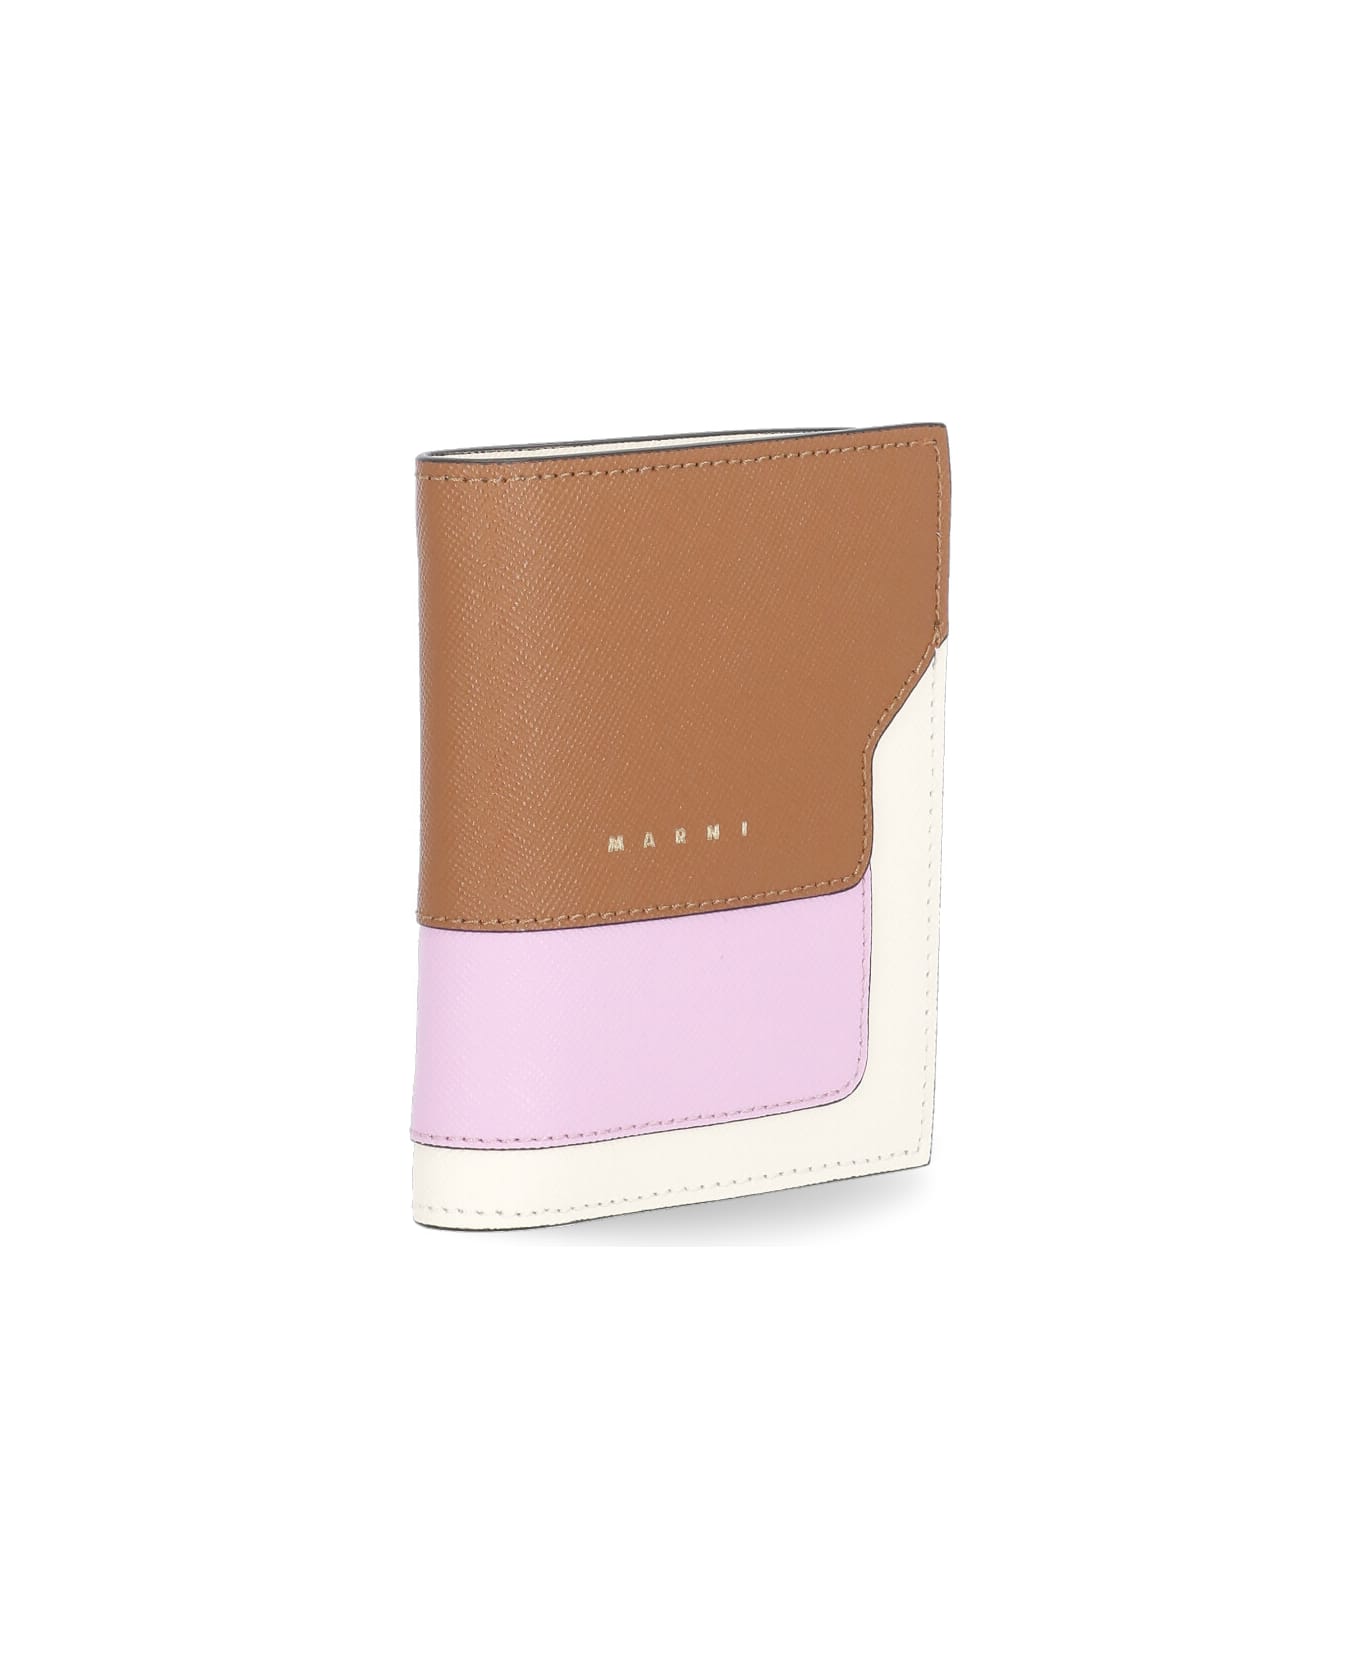 Marni Saffiano Bi-fold Wallet - MOCA/PINK CANDY/SHELL